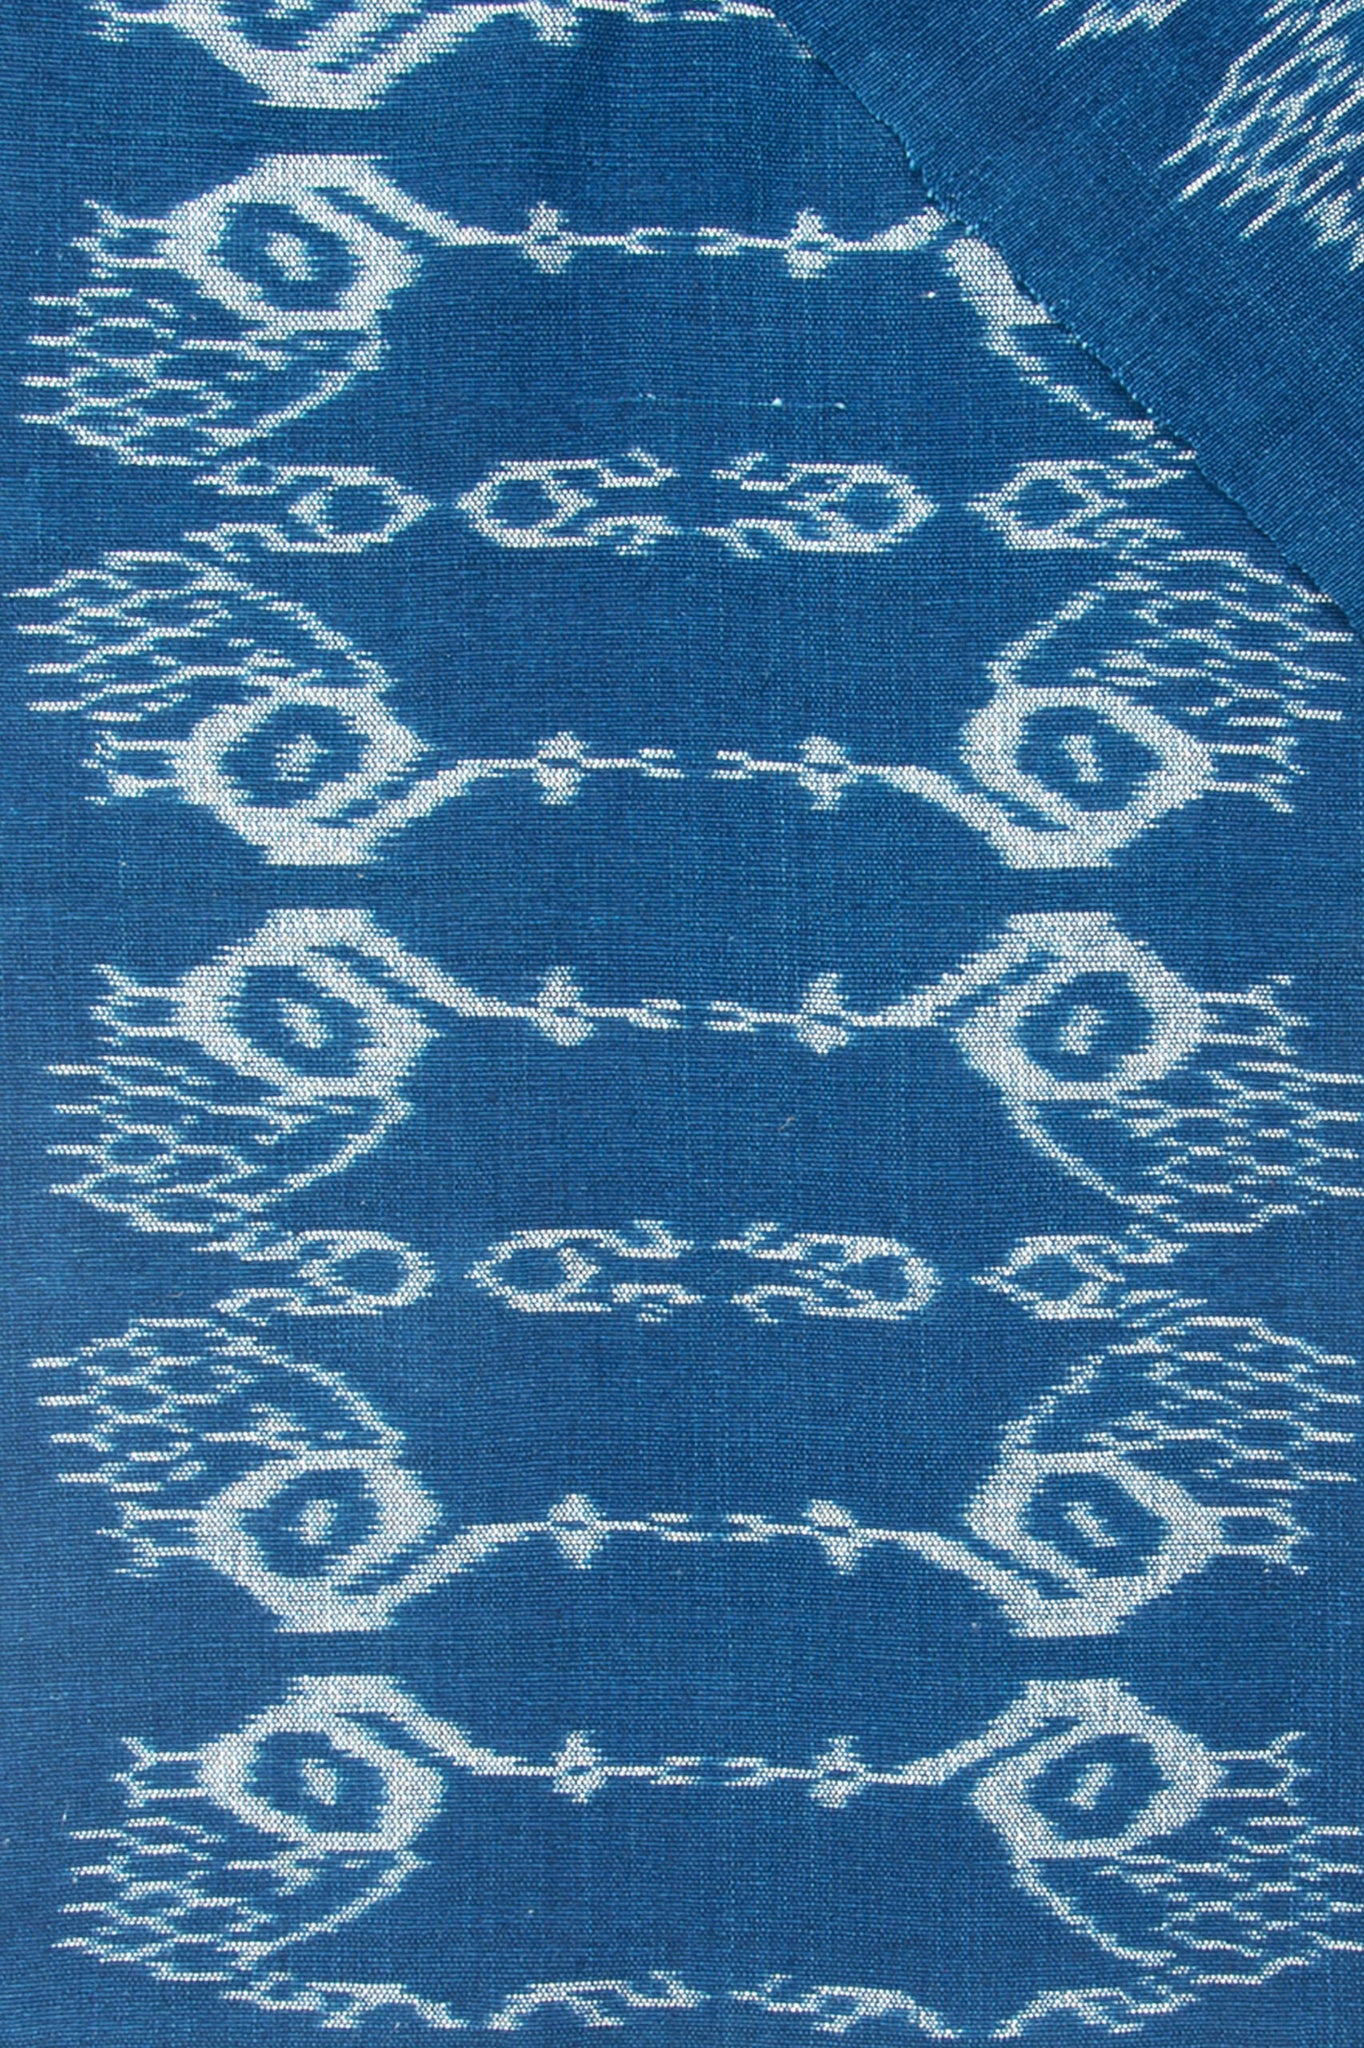 Peacock Scarf - Ikat Weave